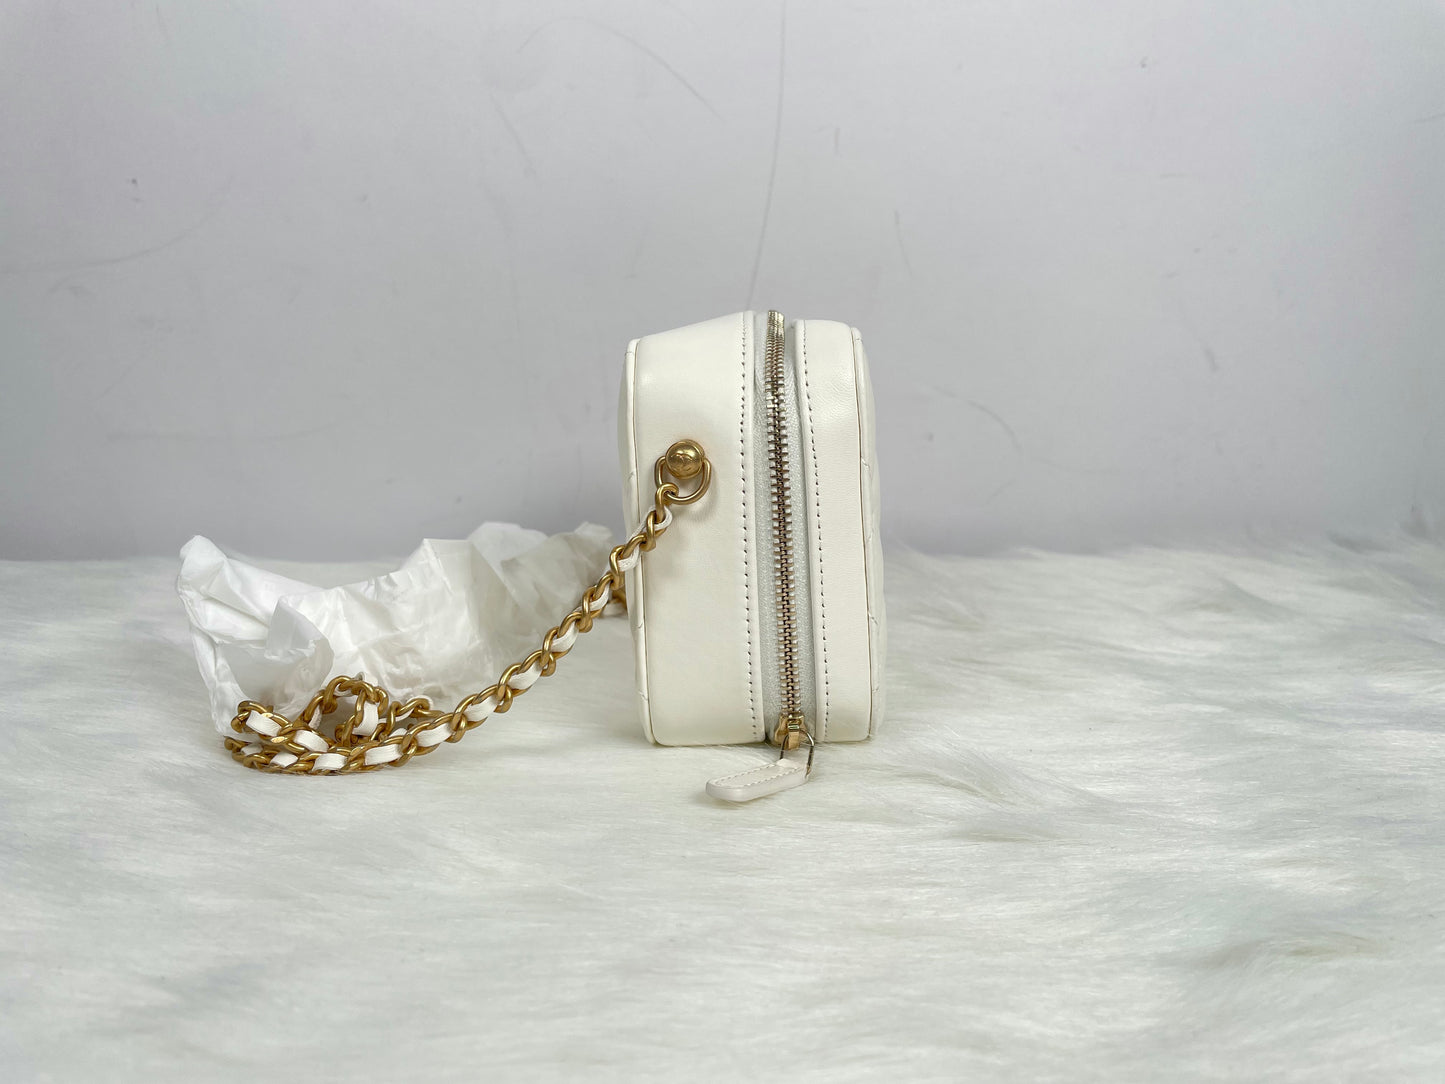 Chanel Vanity Case With Chain 白色羊皮金扣金球相機包